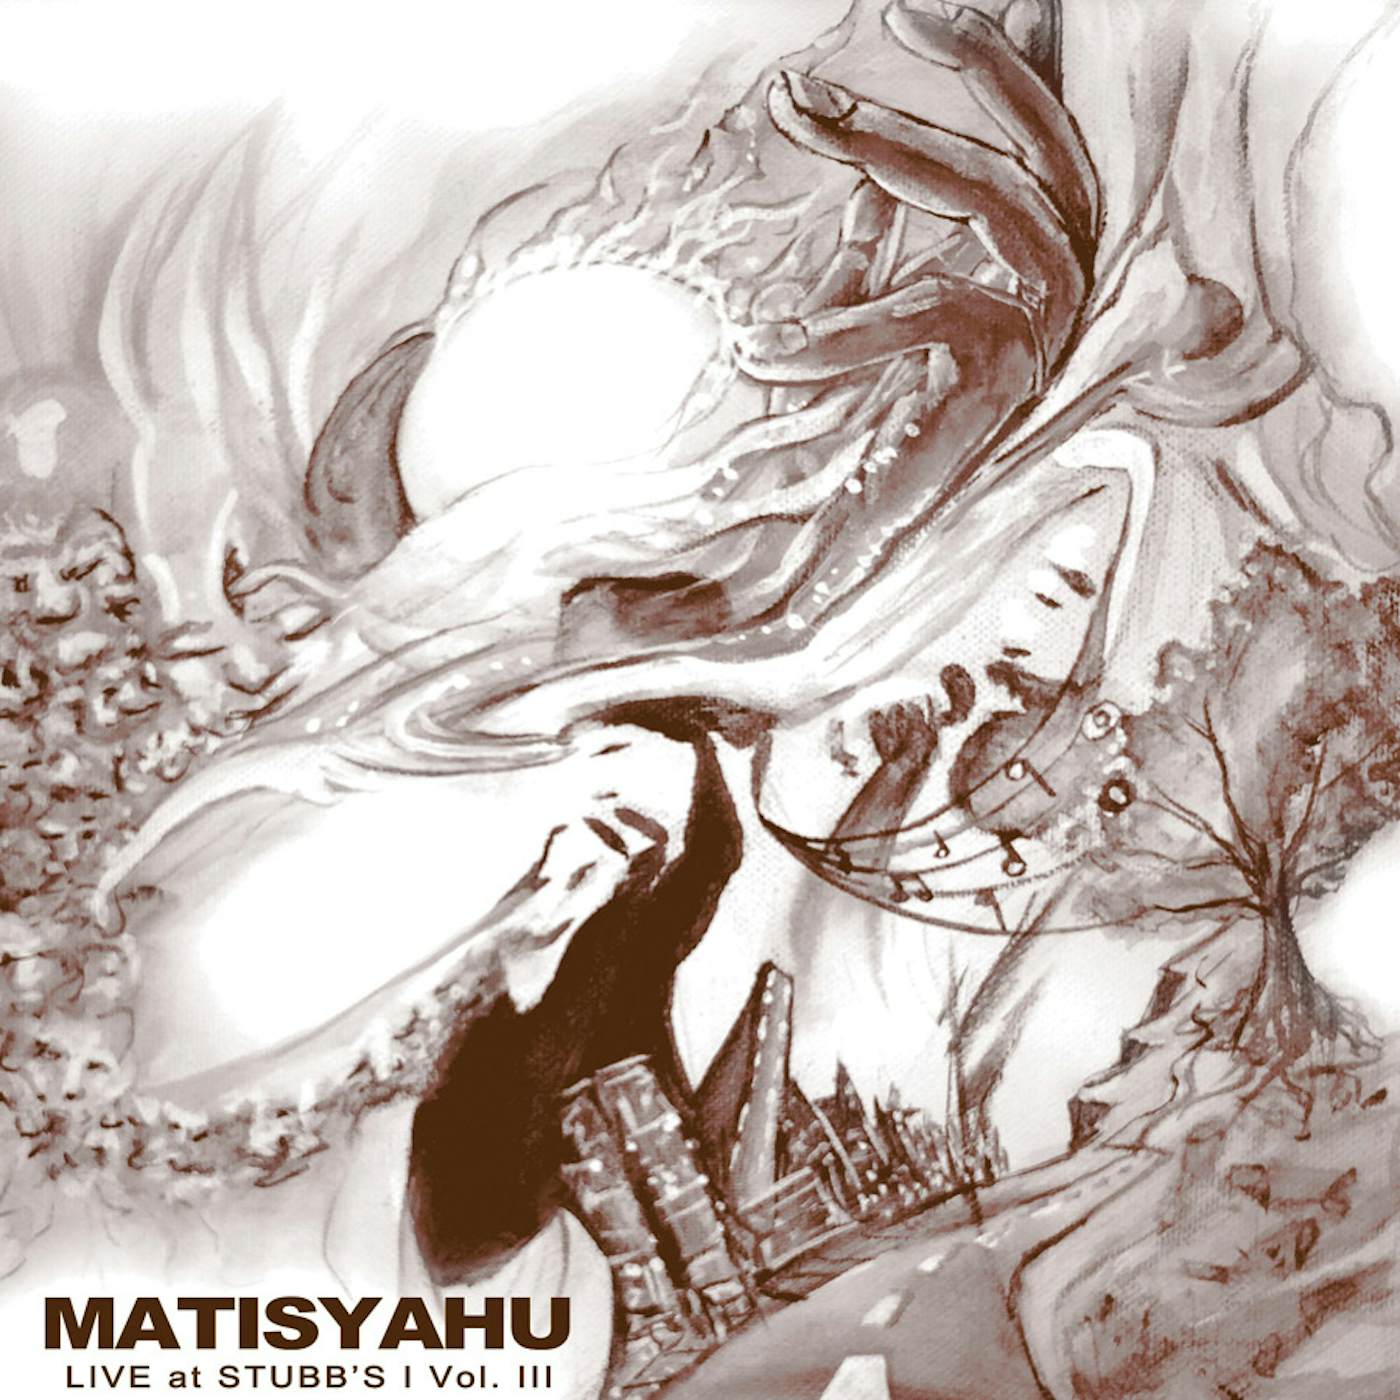 Matisyahu LIVE AT STUBBS VOL III CD